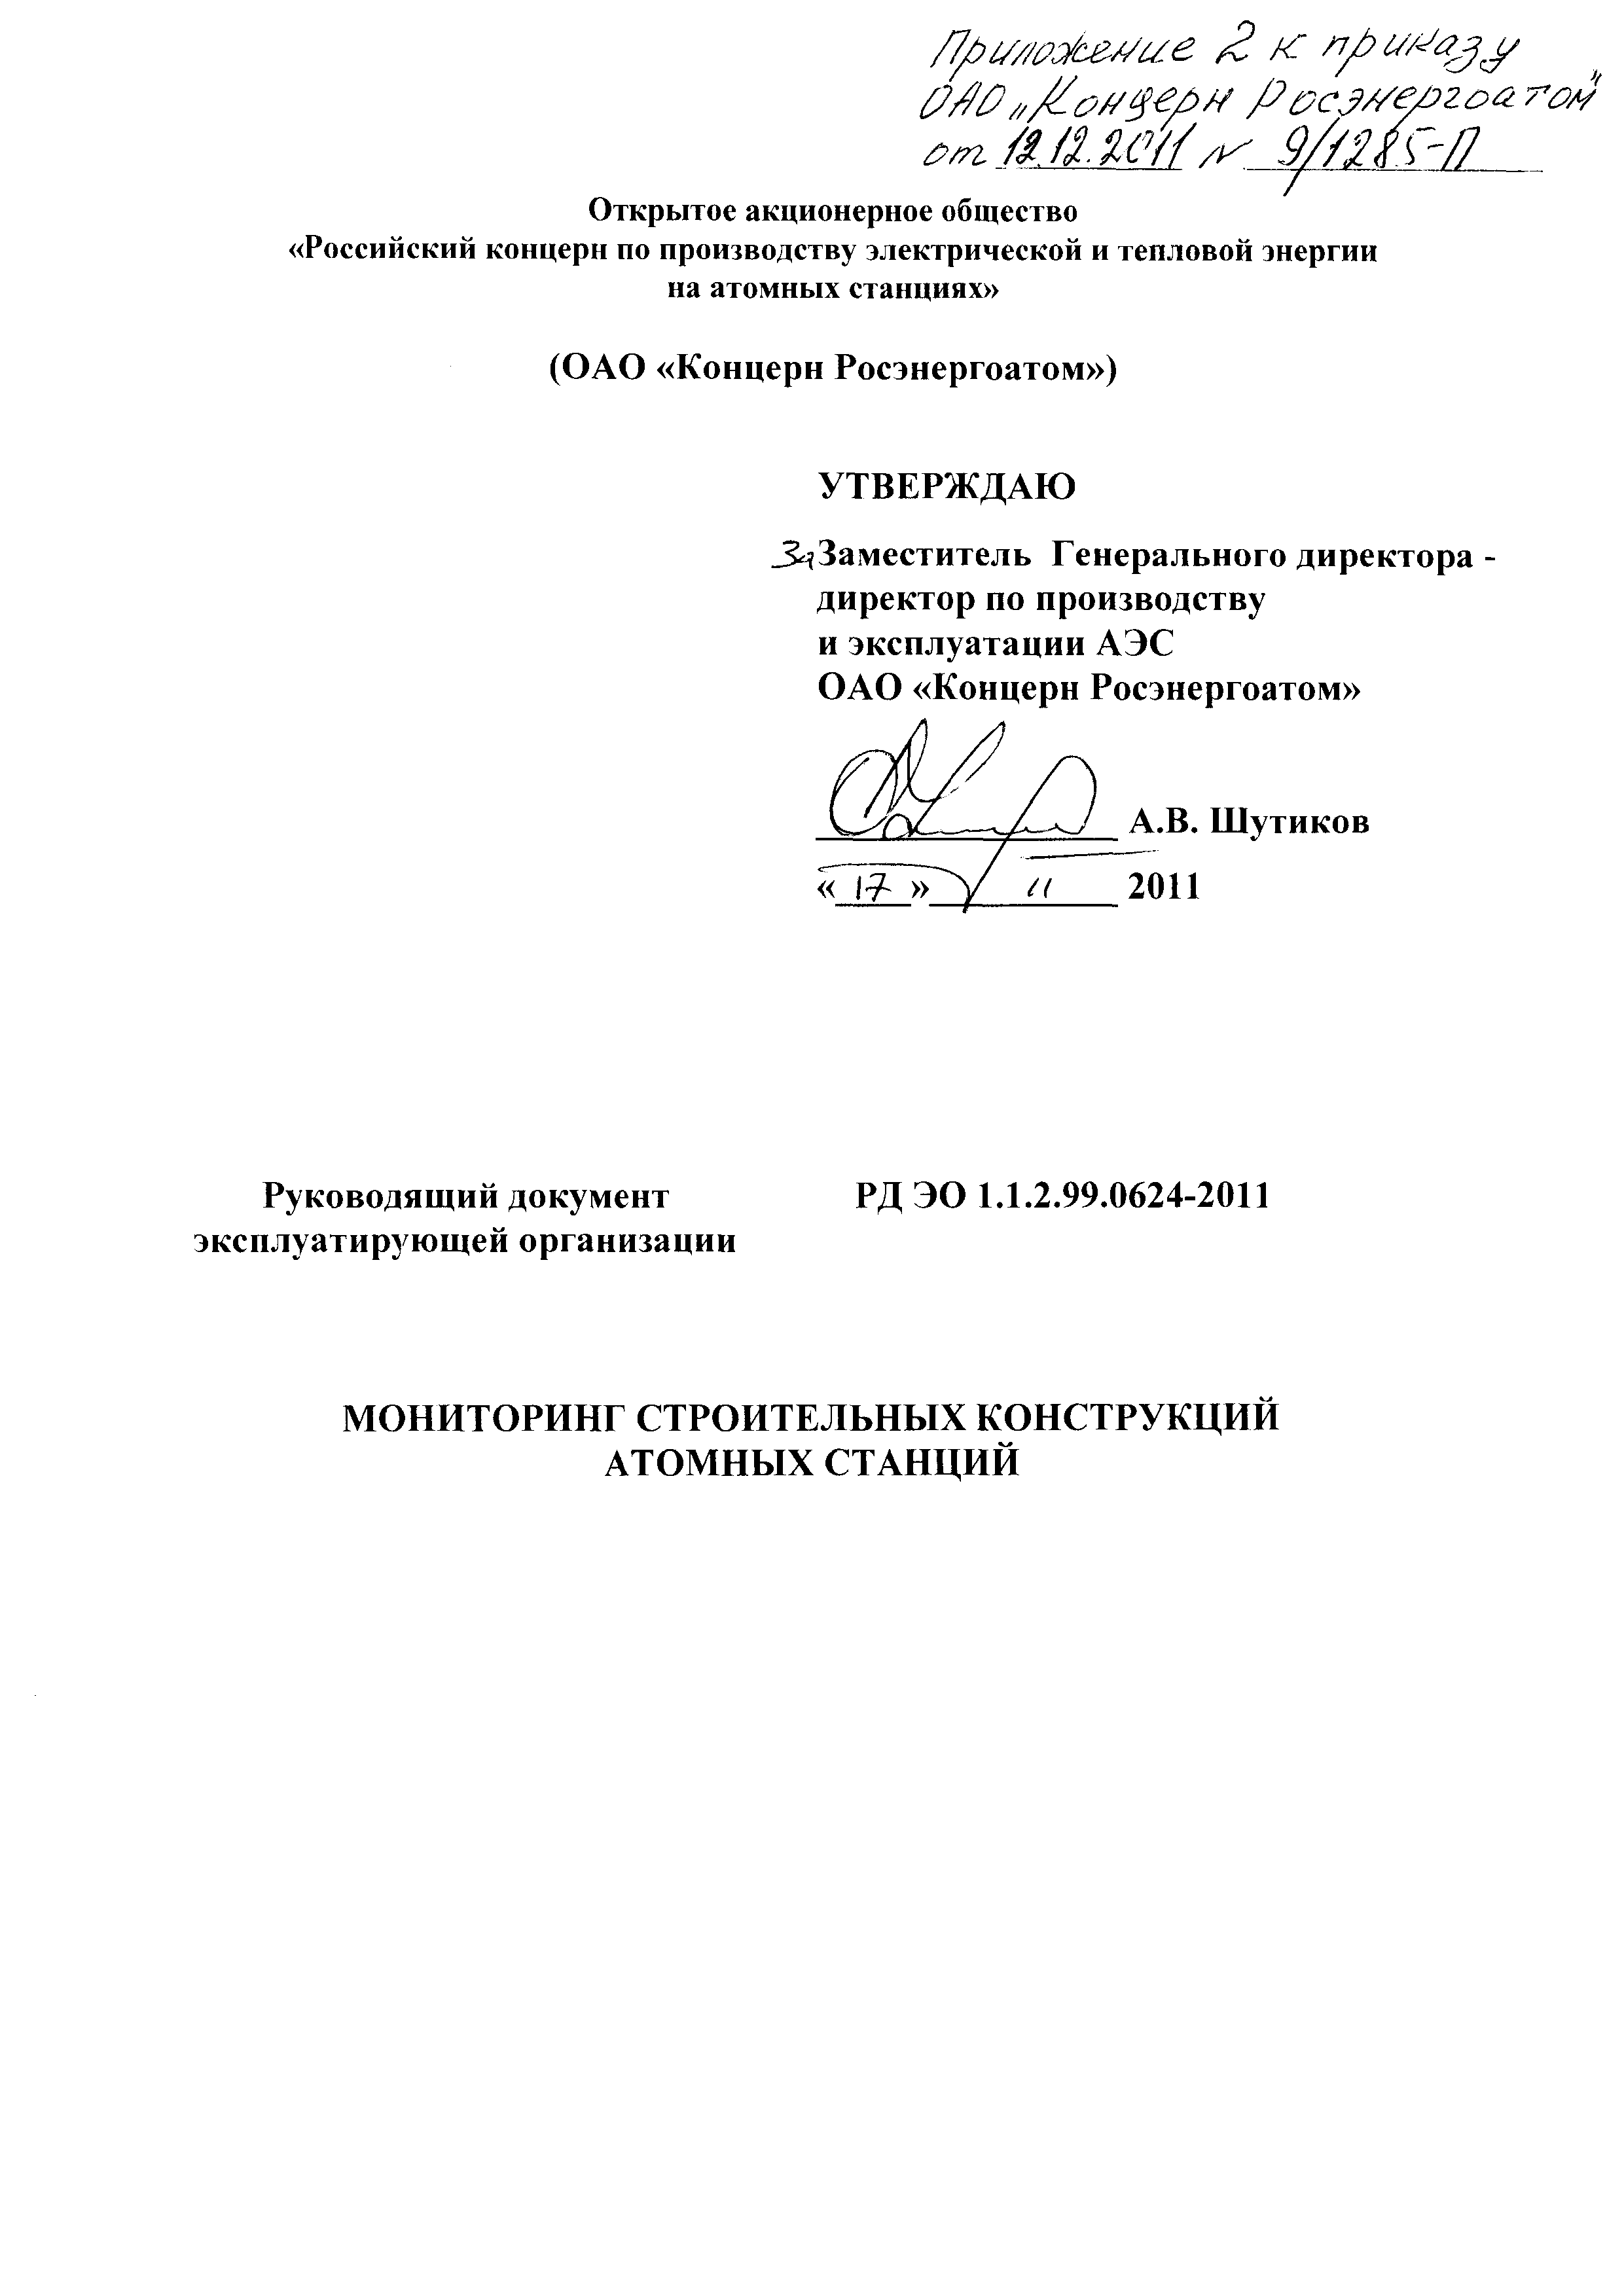 РД ЭО 1.1.2.99.0624-2011